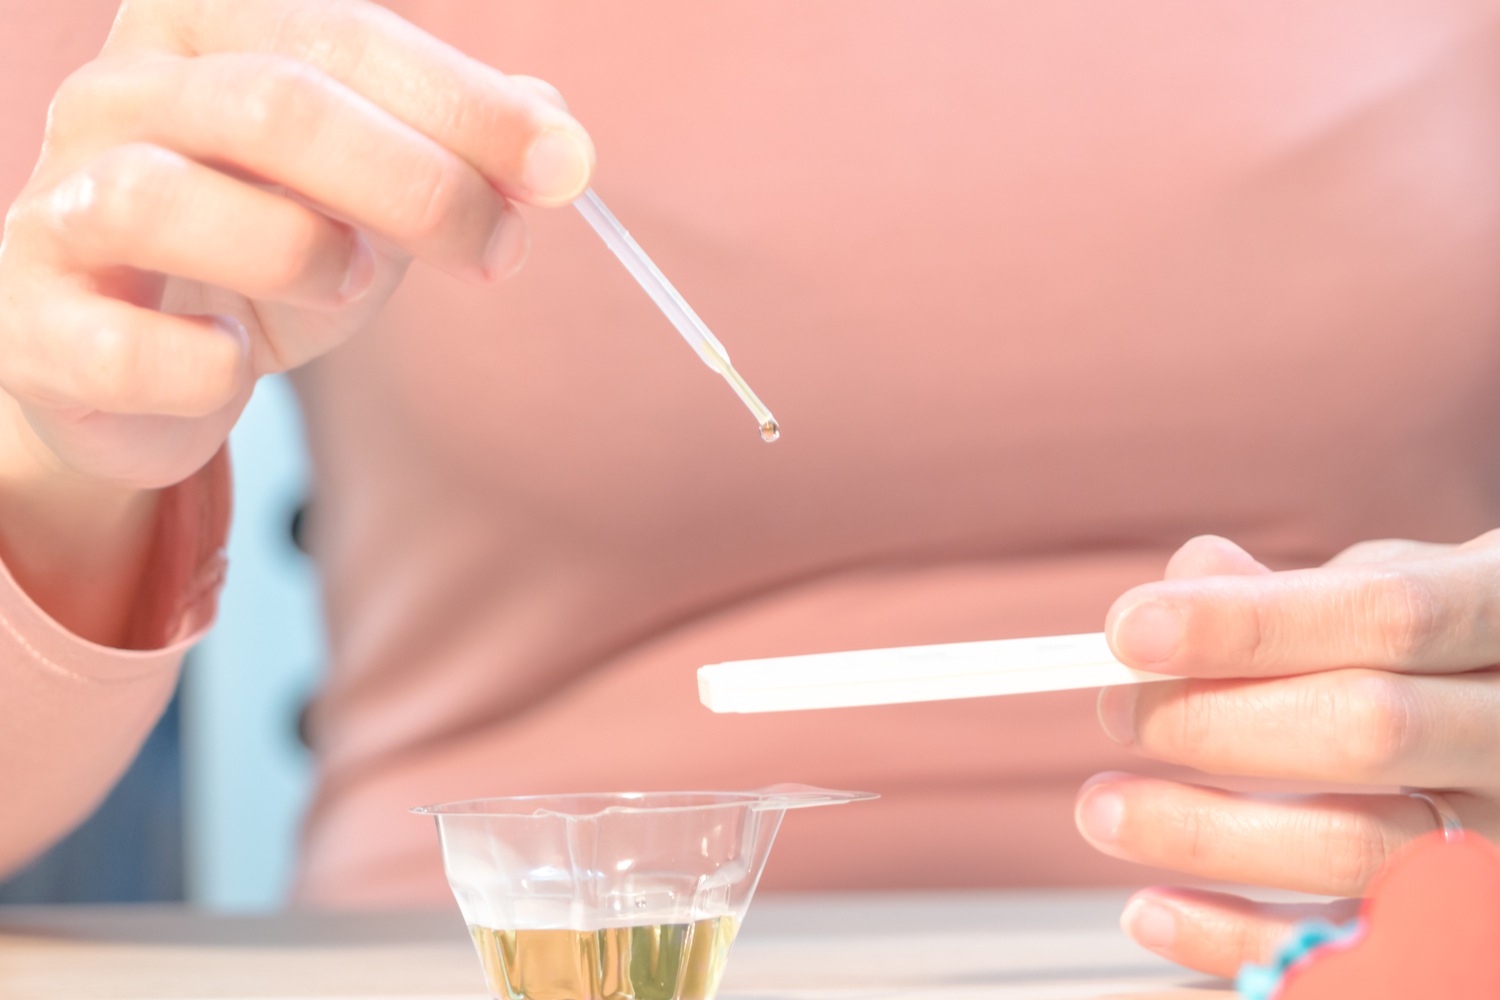 Methods to test ovulation